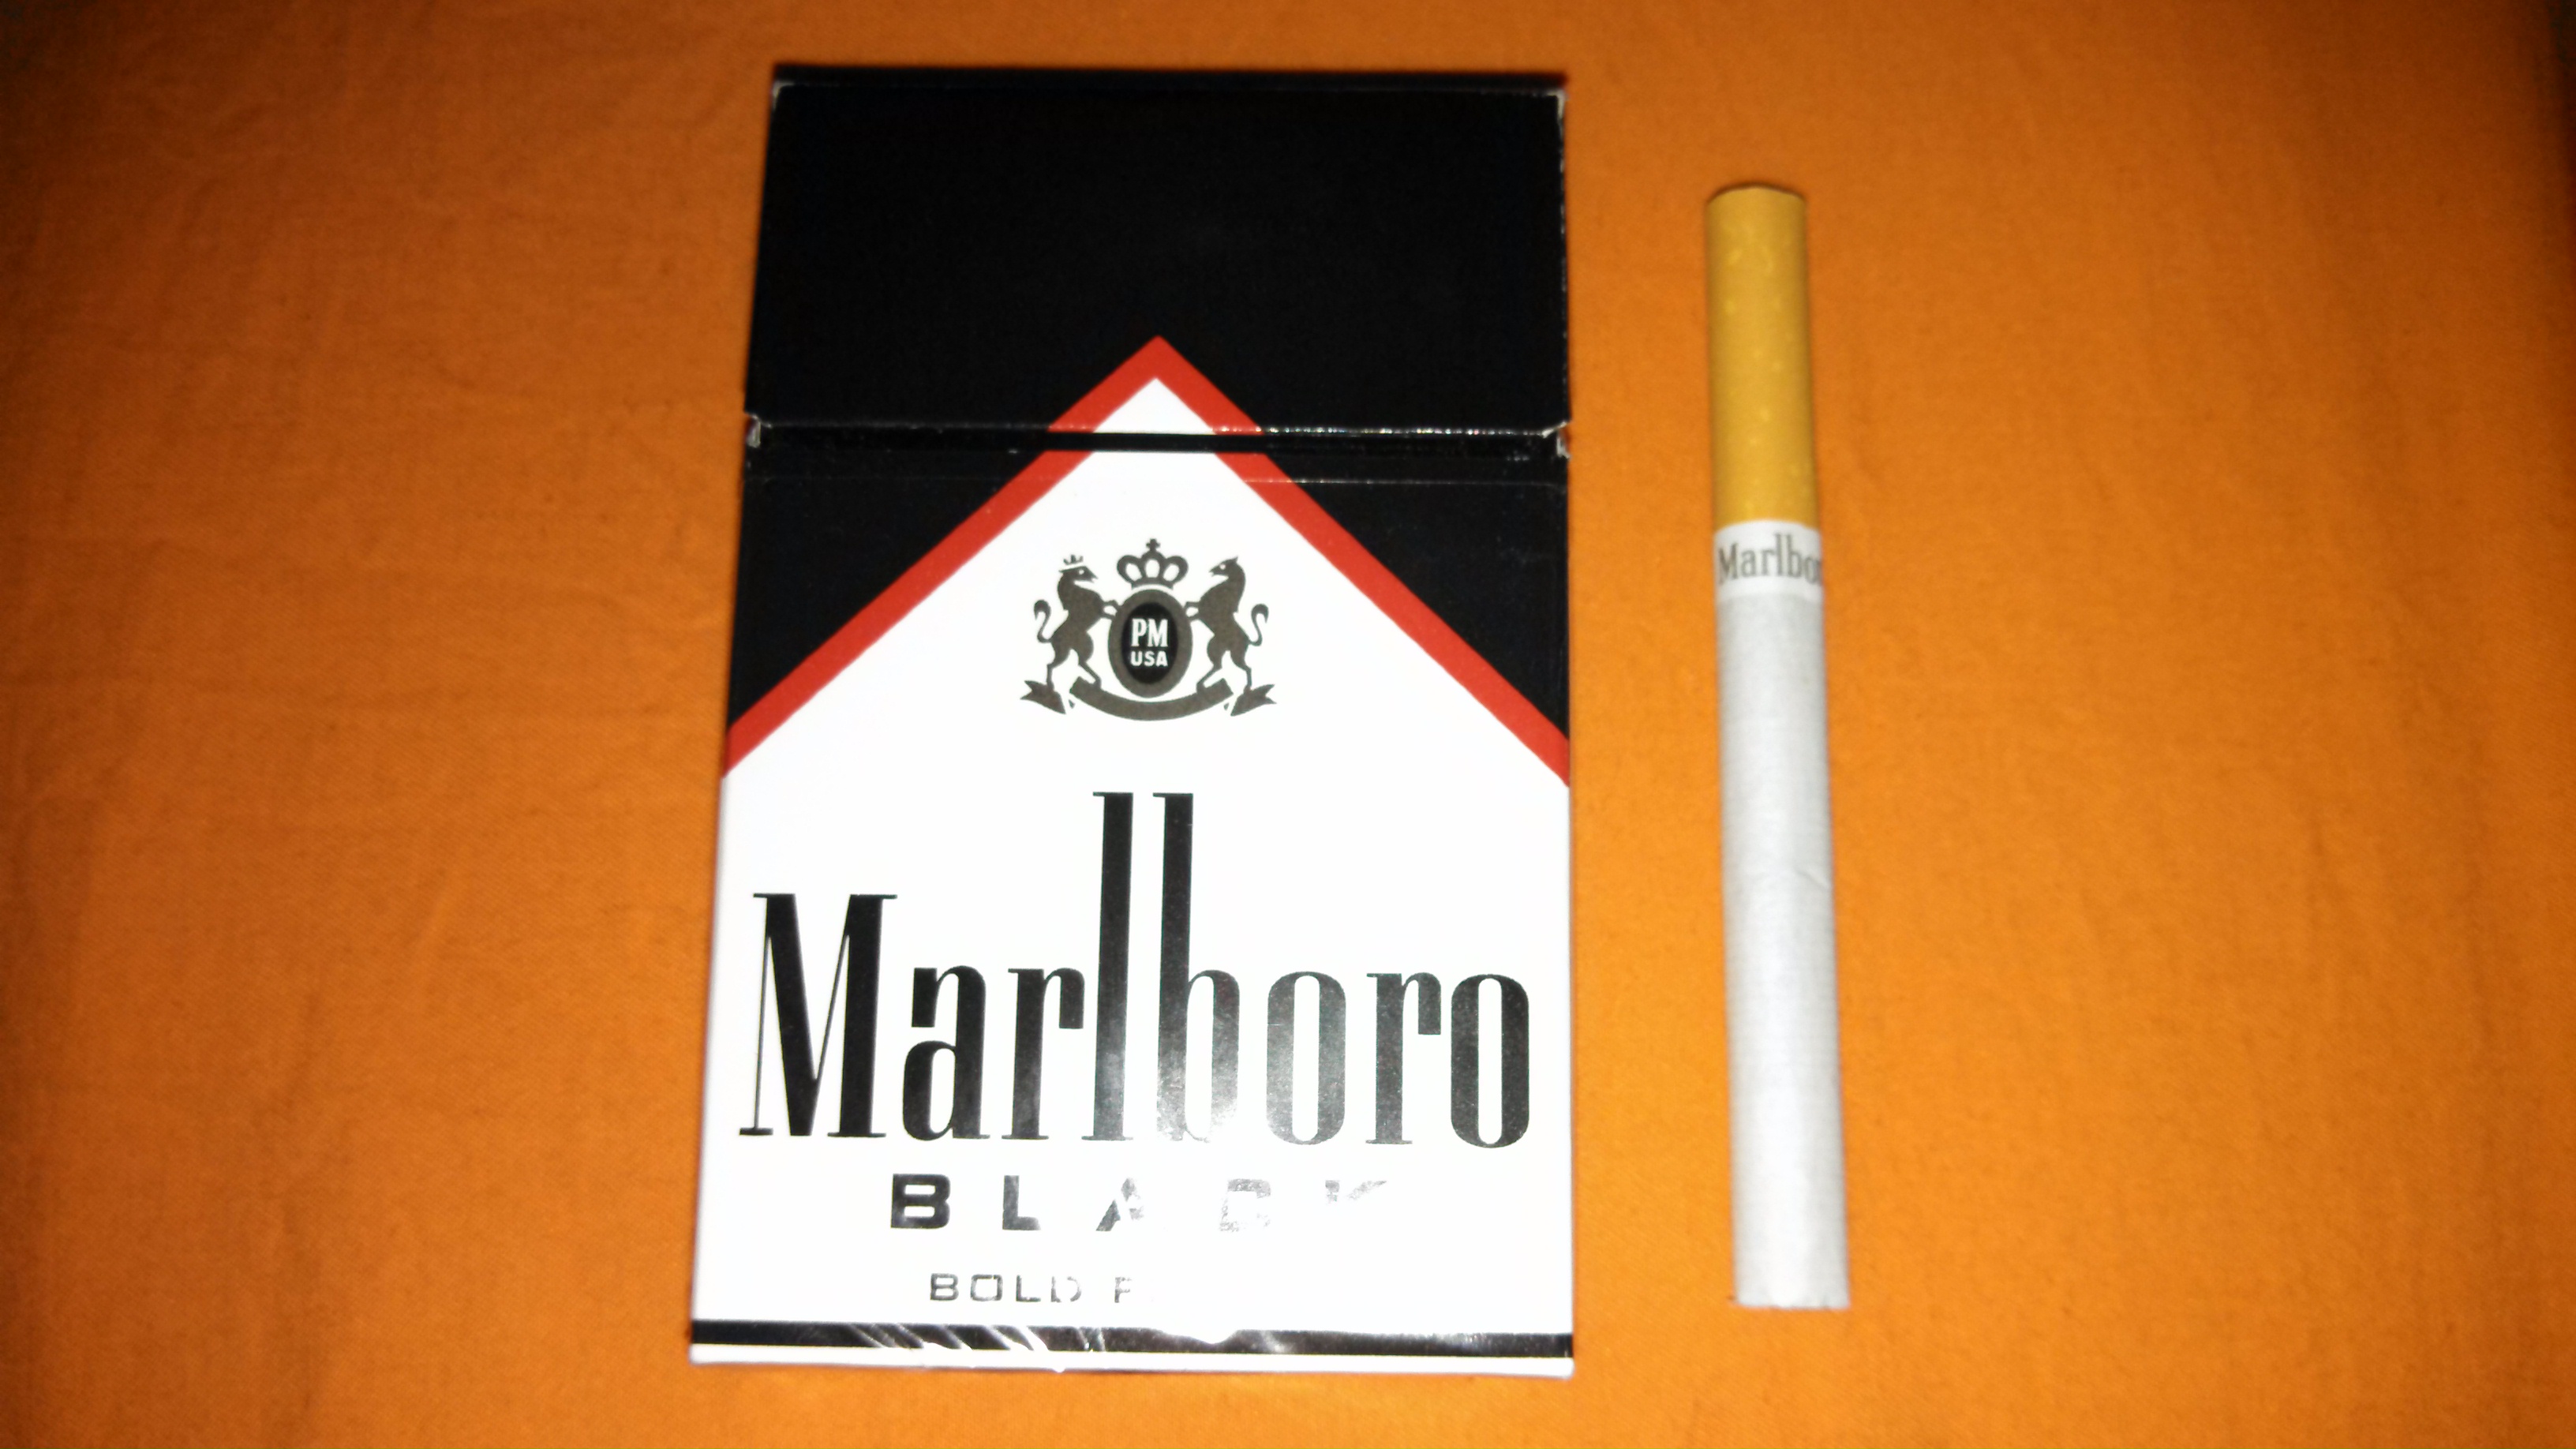 Marlboro Menthol Cigarettes Types